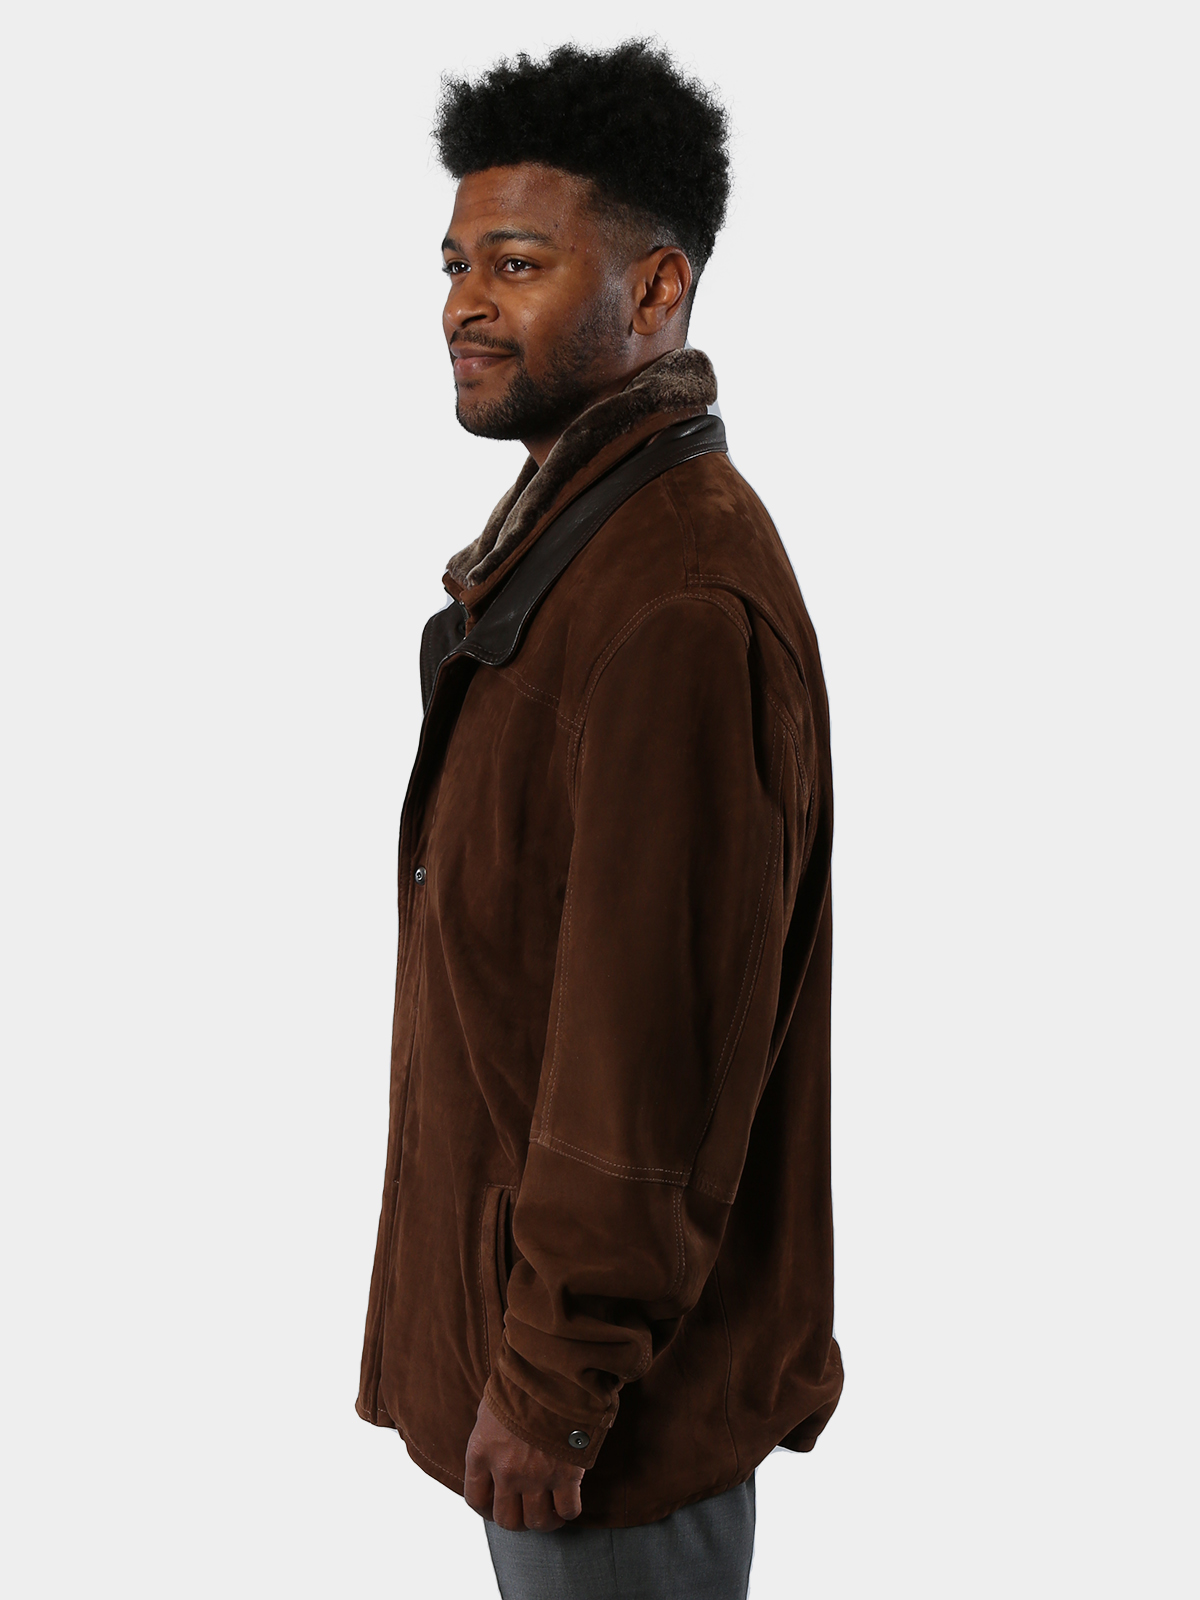 Brown Leather Jacket (Men's XL) - Estate Furs